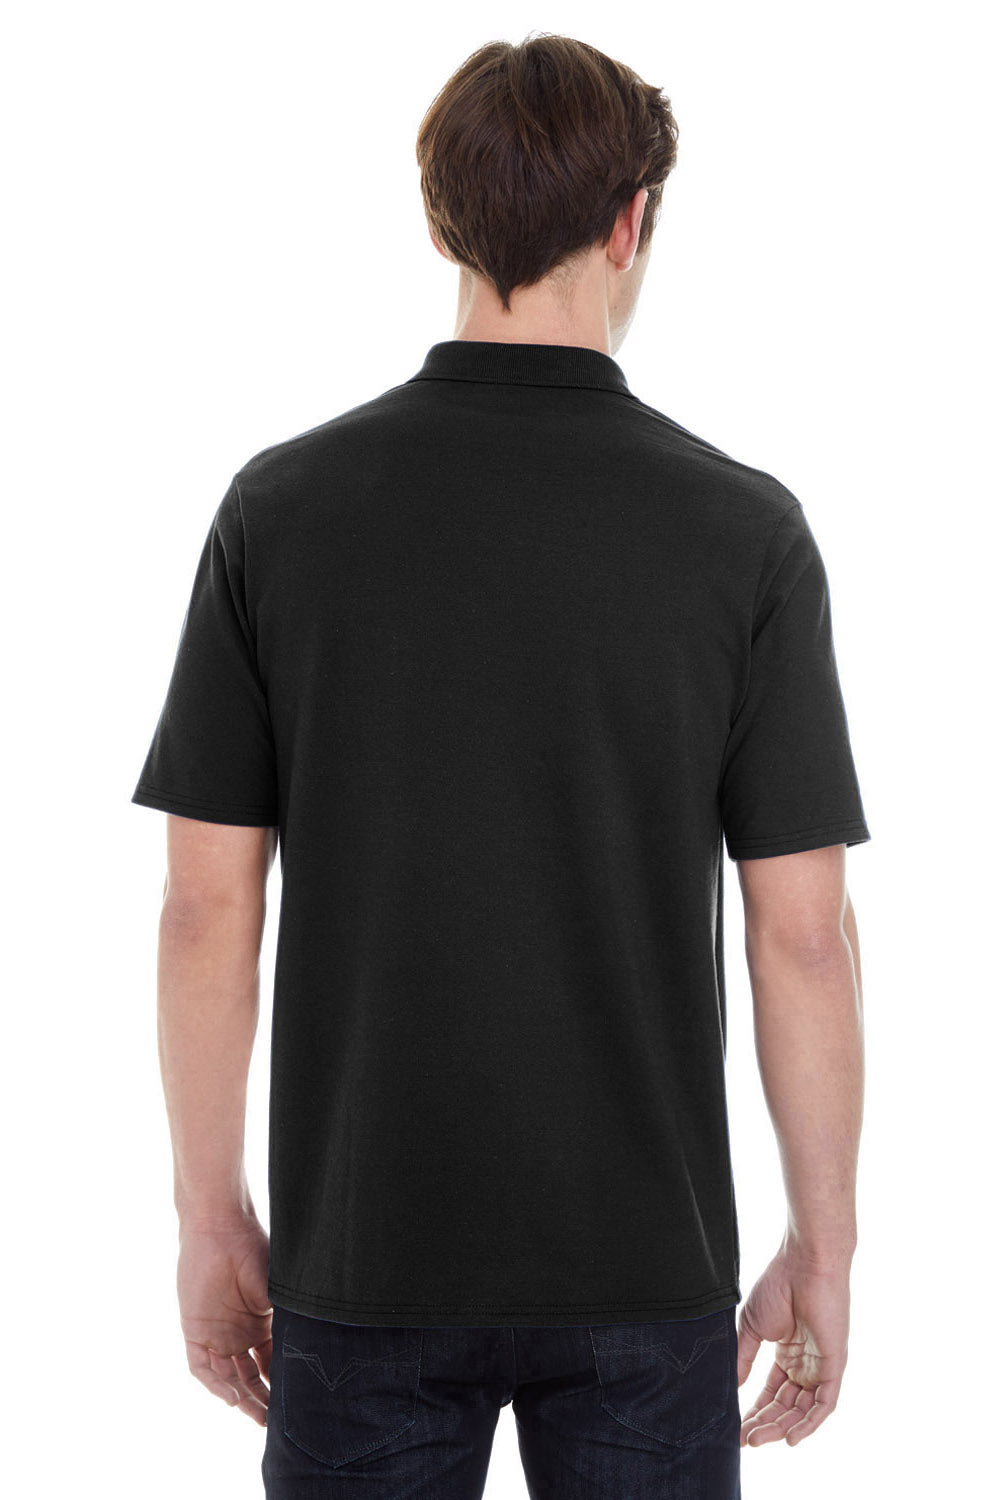 Hanes 055P Mens X-Temp Fresh IQ Moisture Wicking Short Sleeve Polo Shirt Black Back